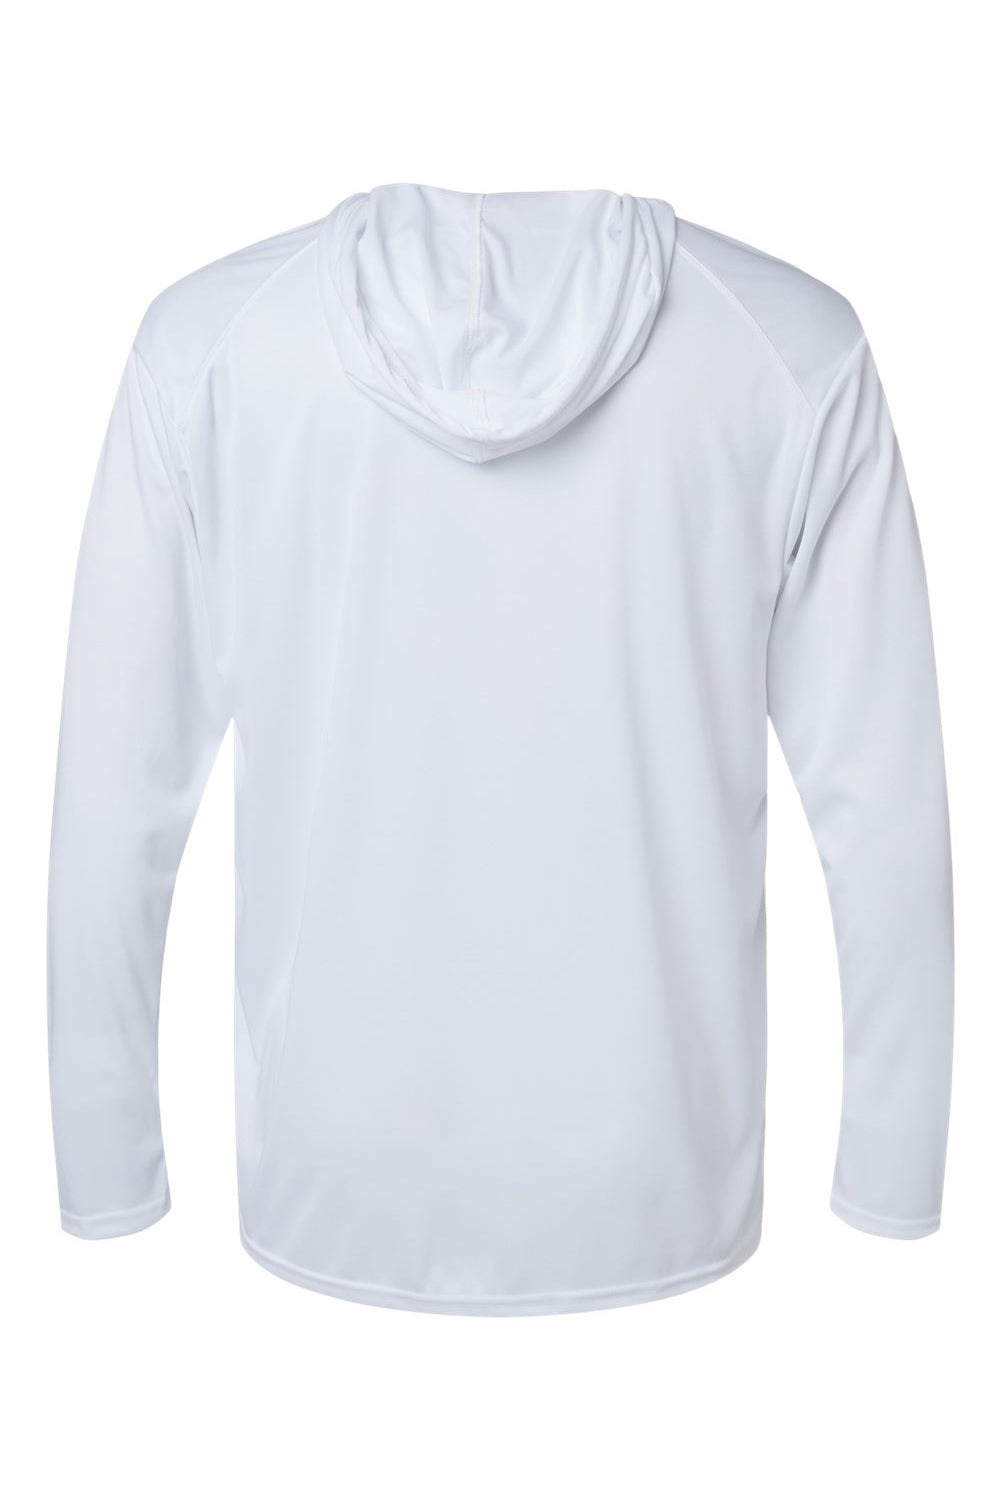 Badger 4105 Mens B-Core Moisture Wicking Long Sleeve Hooded T-Shirt Hoodie White Flat Back